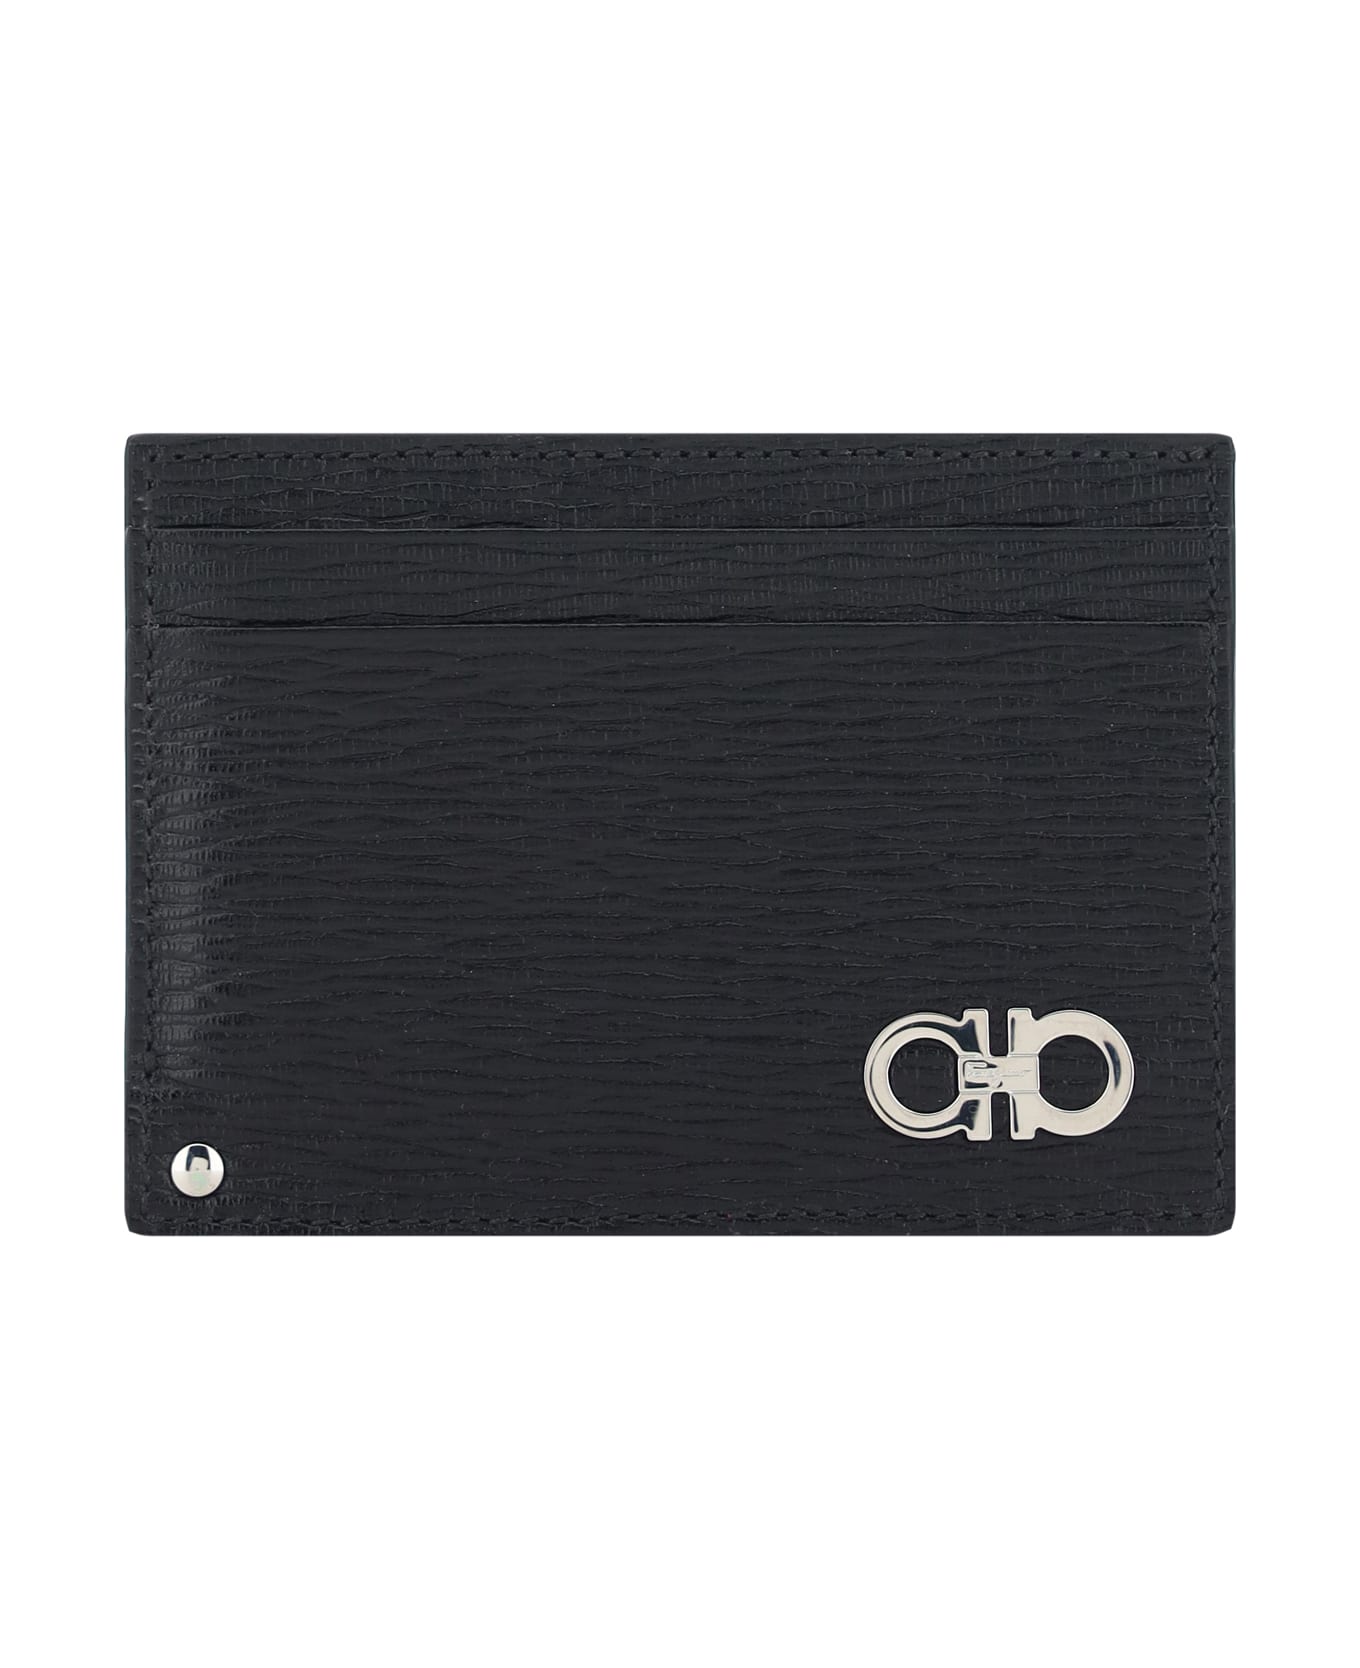 Ferragamo Revival Card Holder - Black